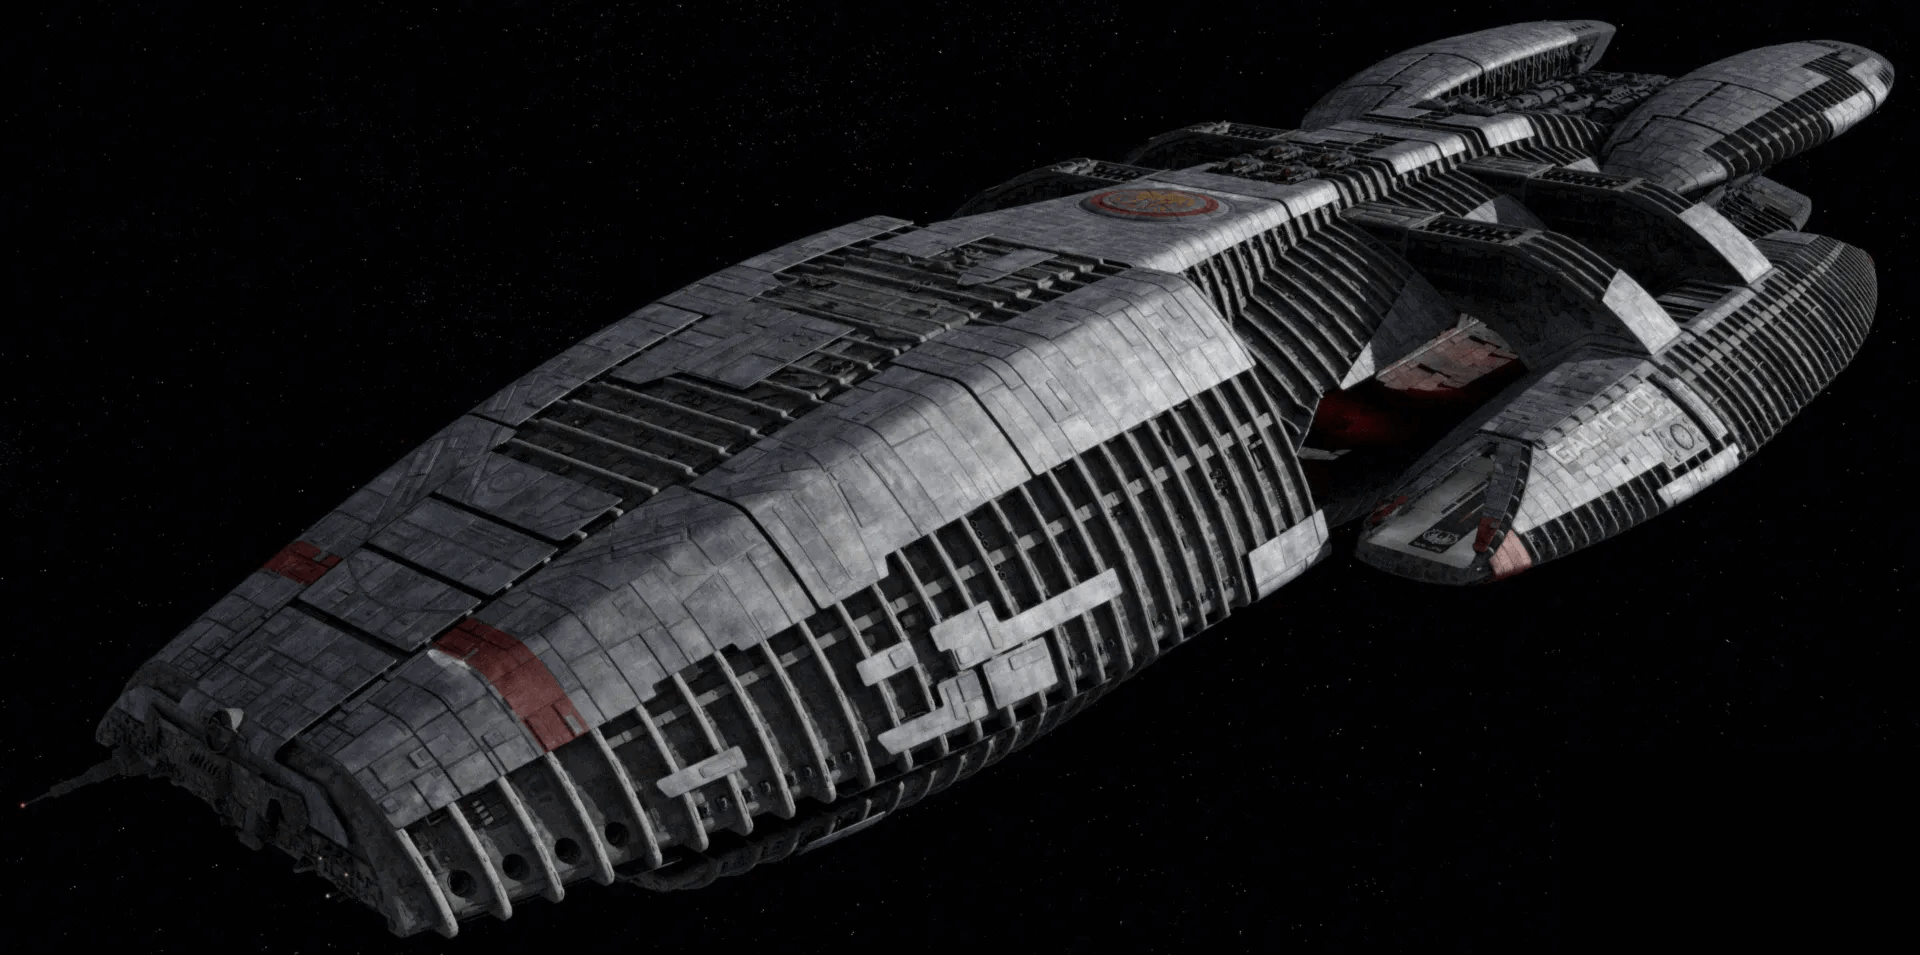 Battlestar Galactica spaceship